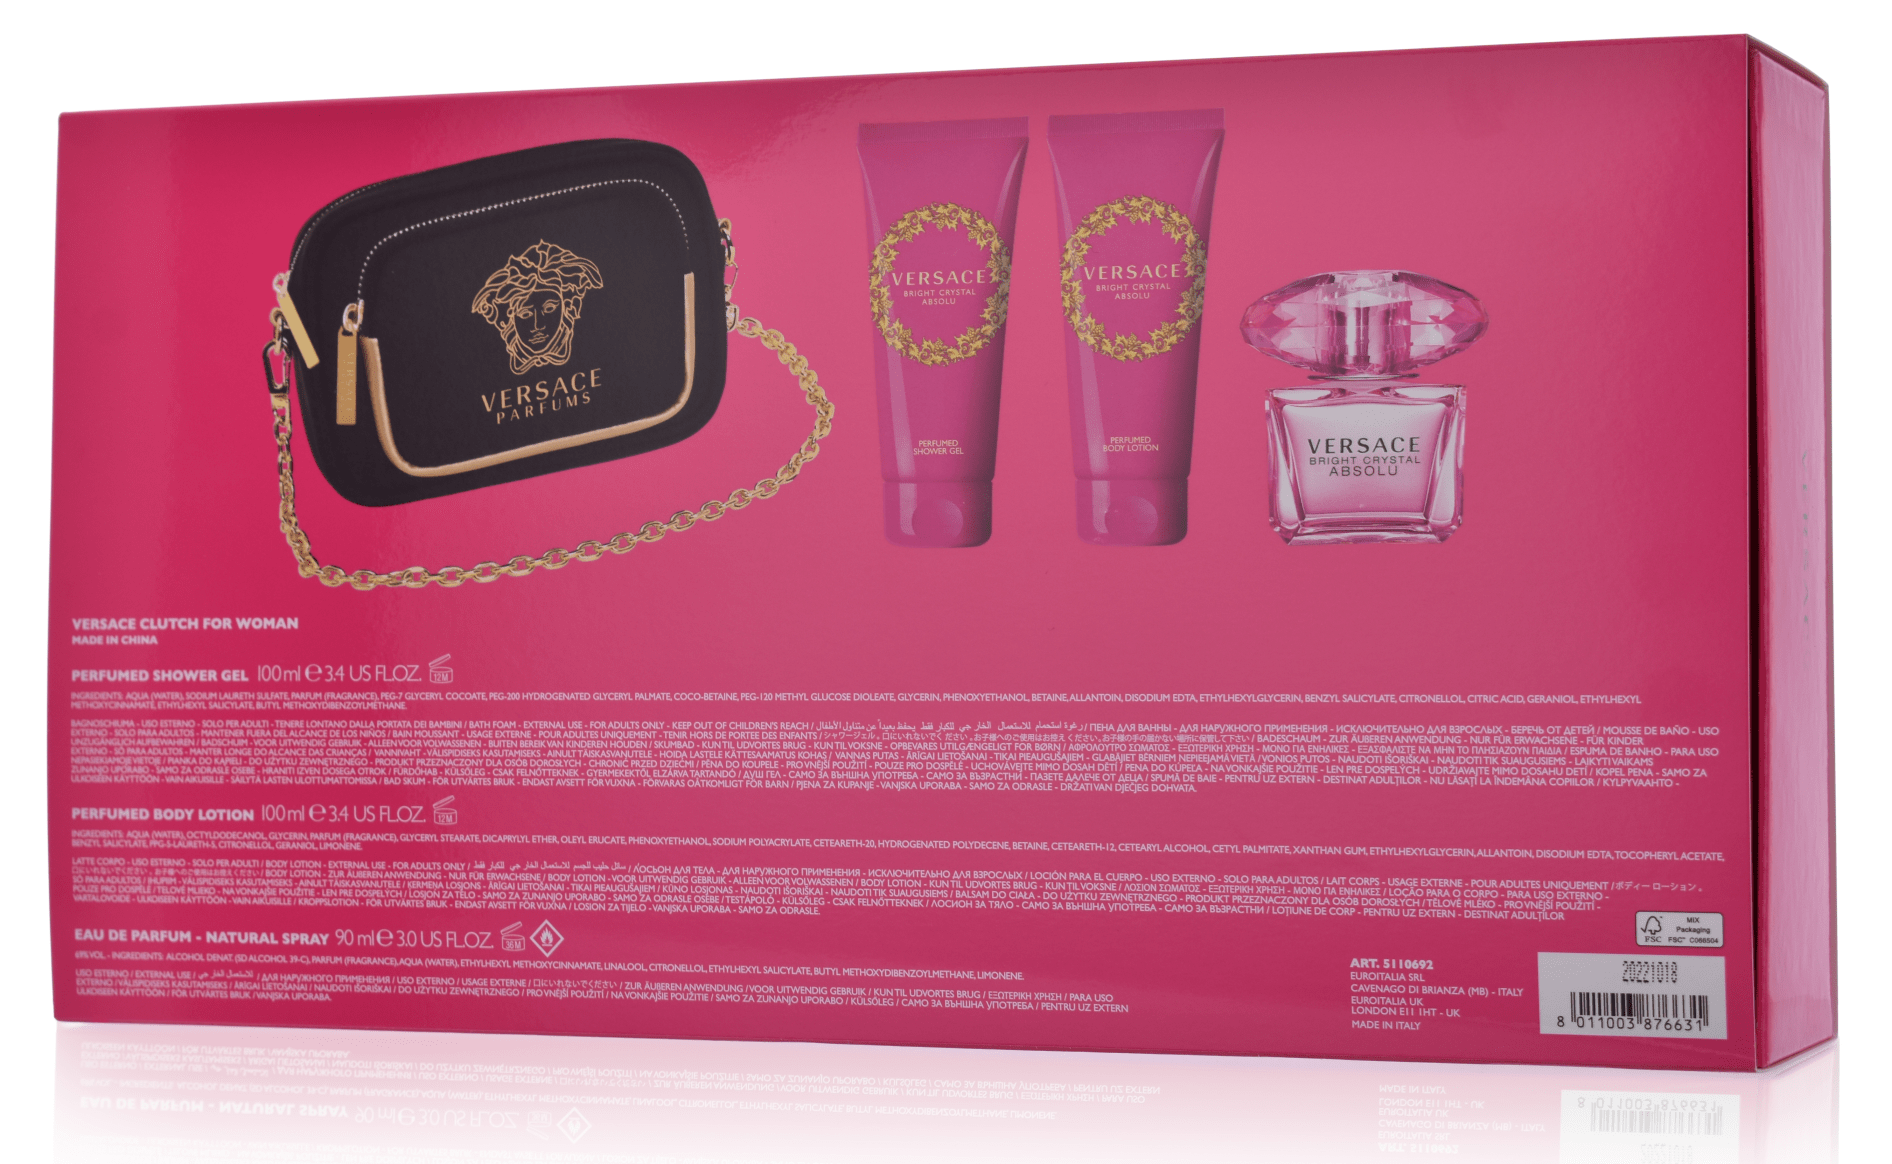 Versace Bright Crystal Absolu 90 ml Eau de Parfum Mega Set 4-teilig